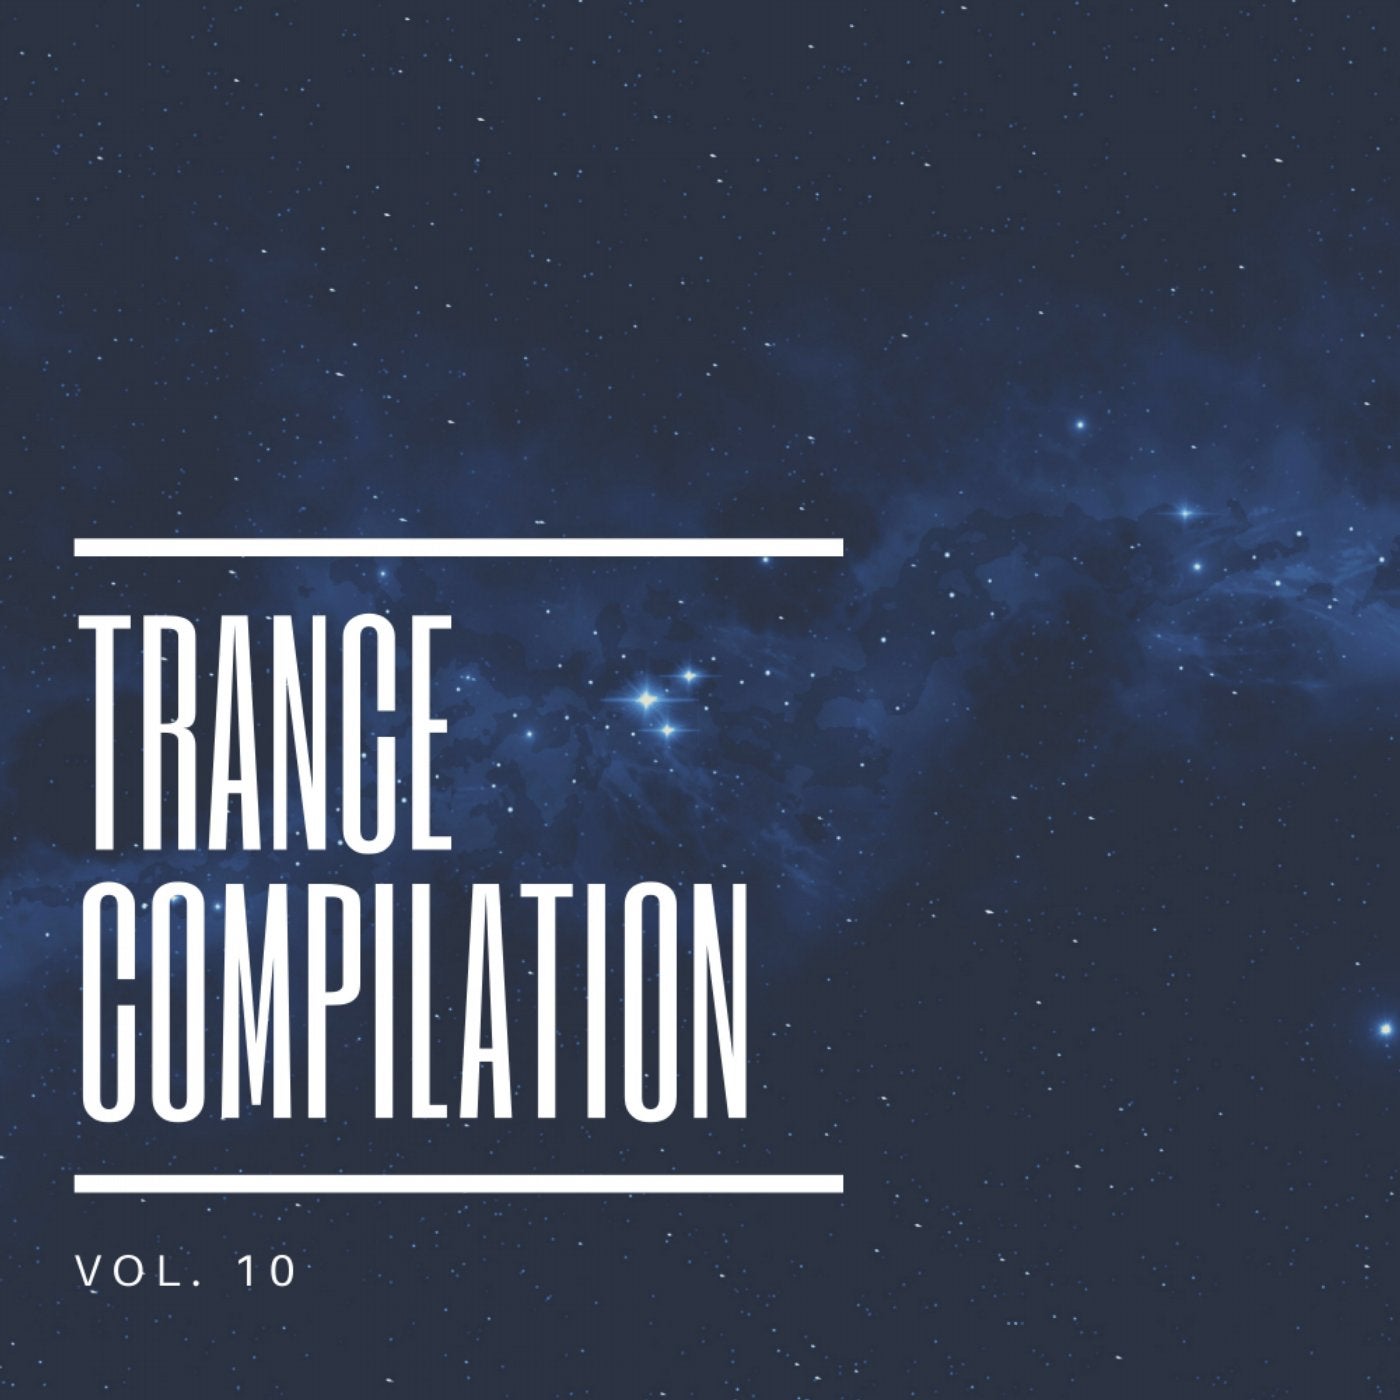 Trance Compilation, Vol.10